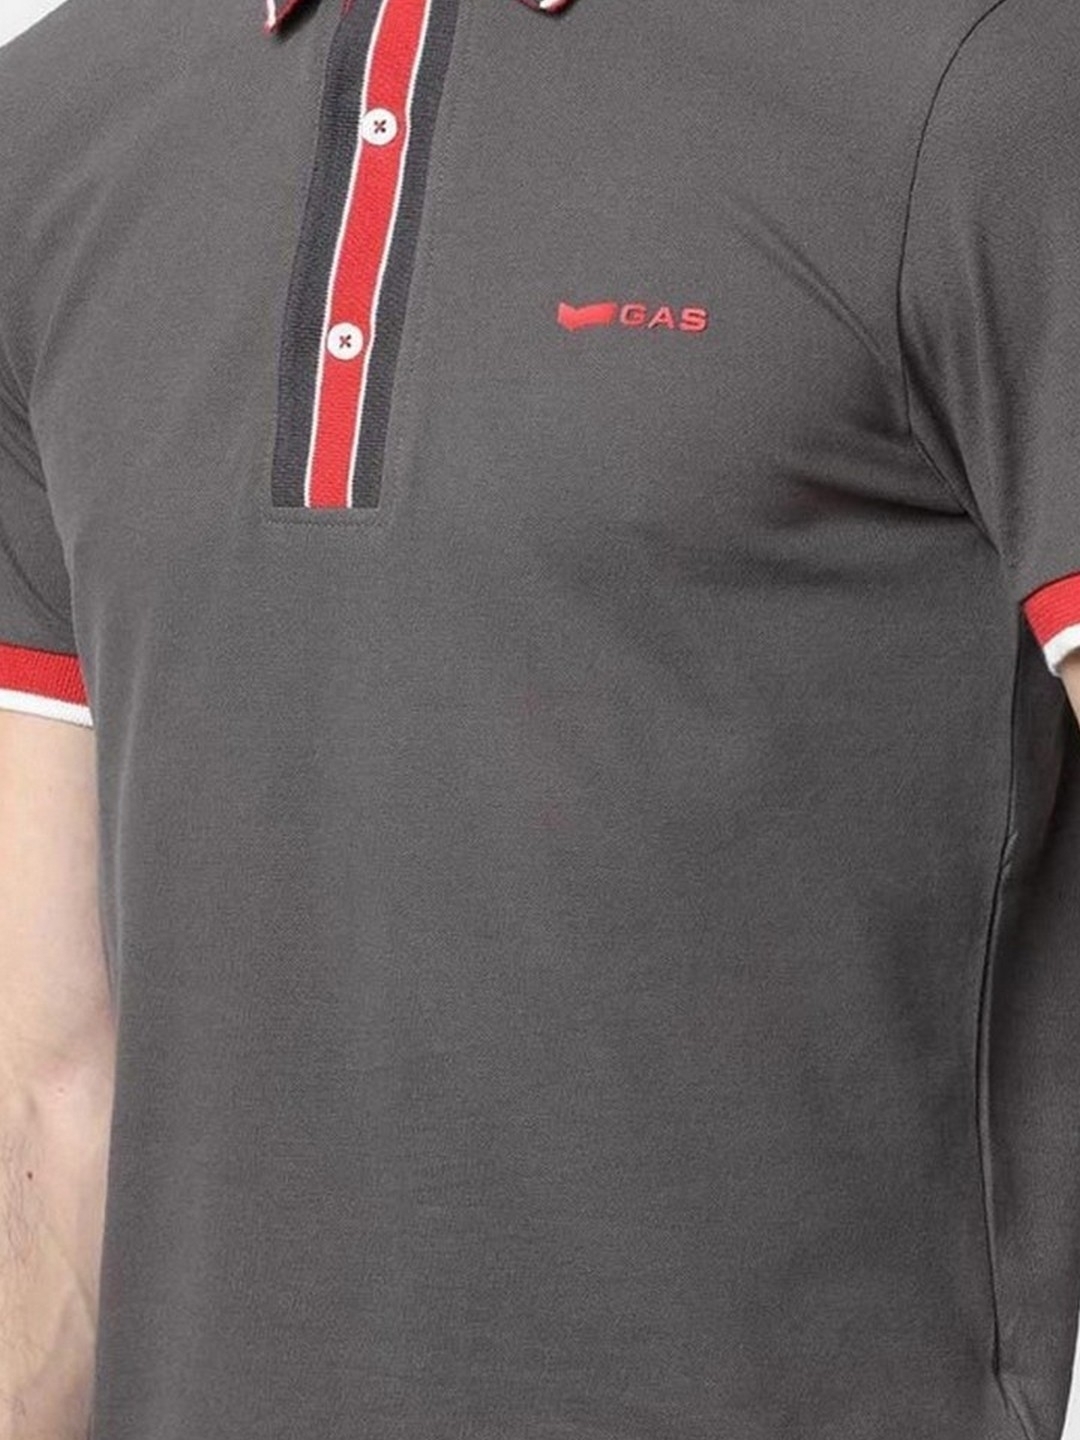 Men's Agap/s solid grey polo t-shirt